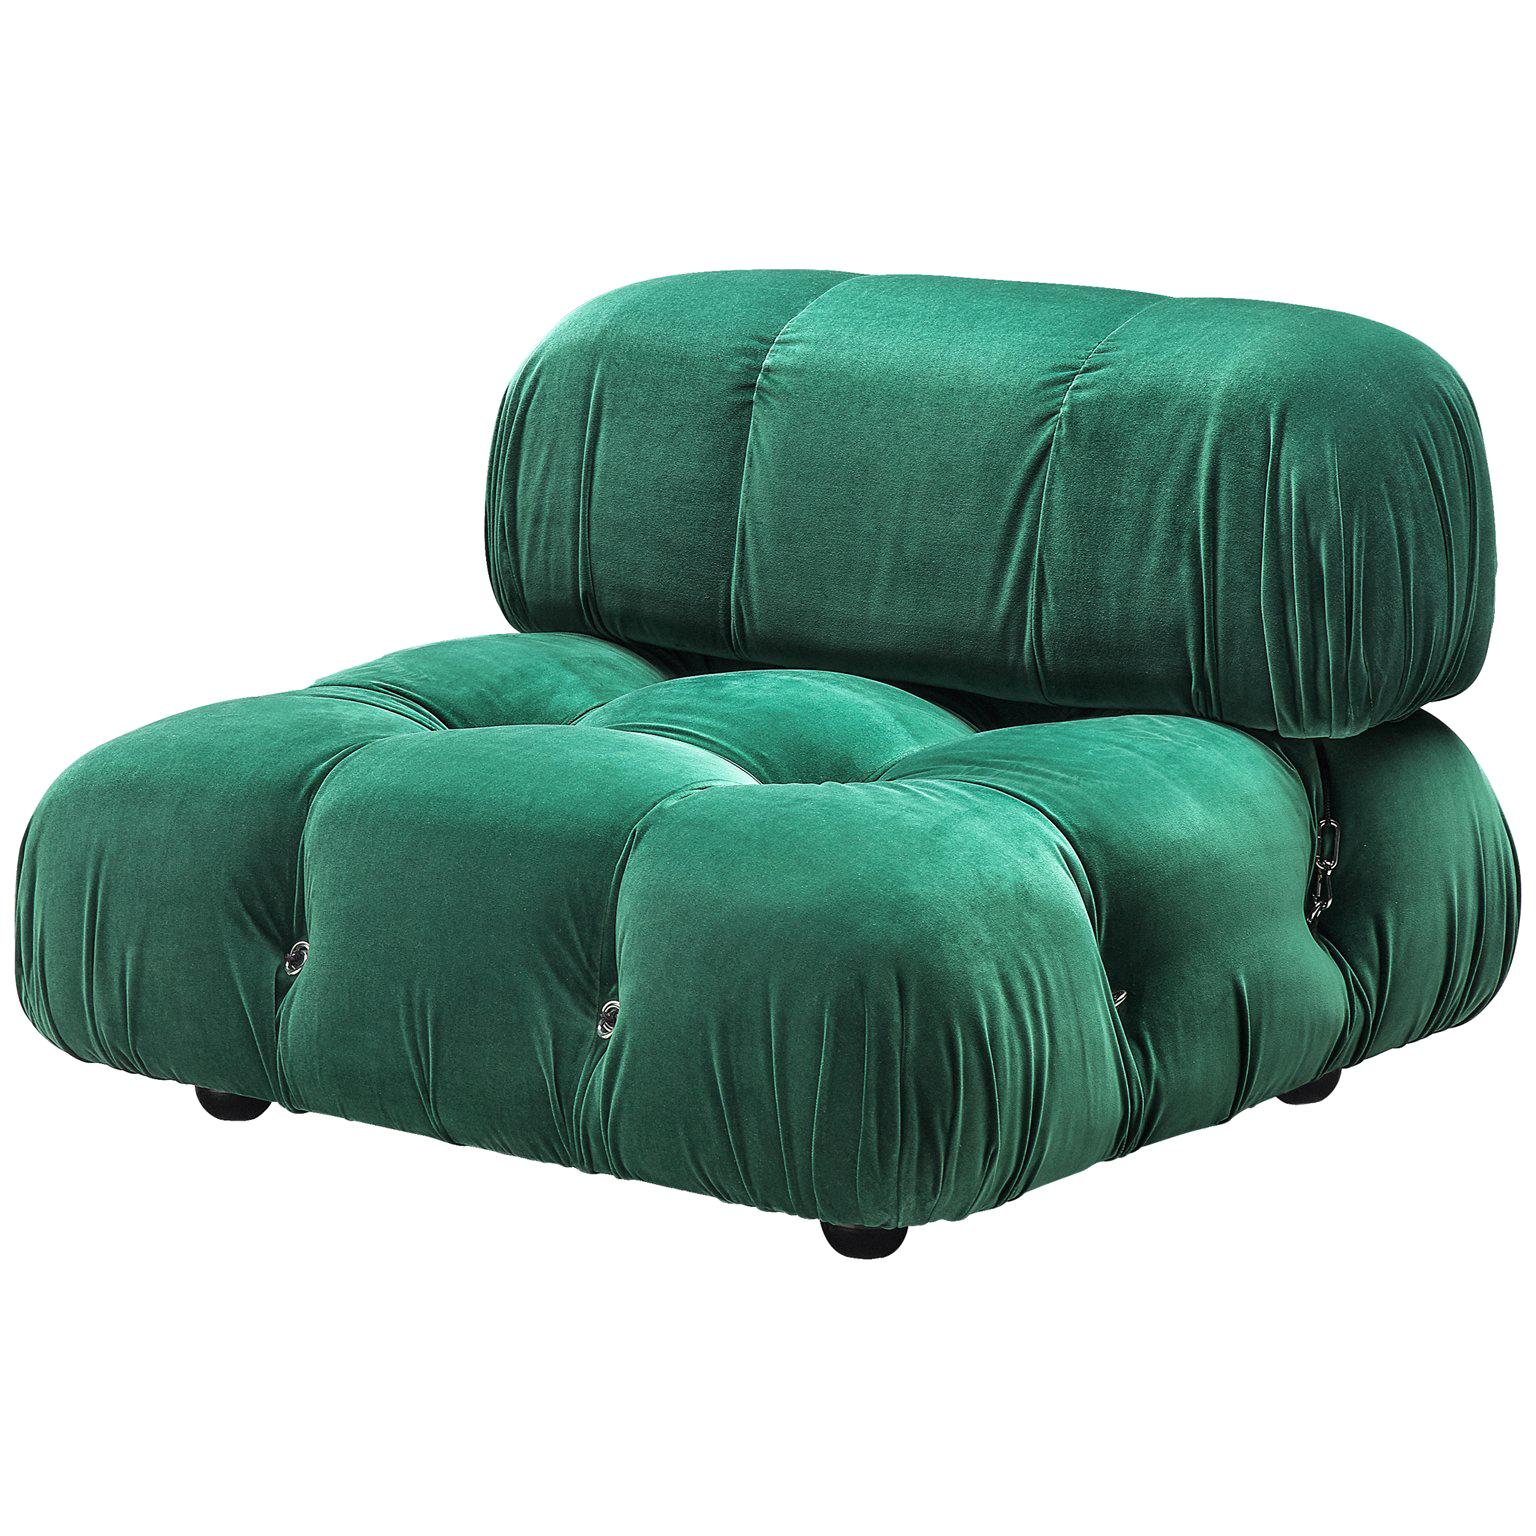 Mario Bellini Reupholstered Camaleonda in Emerald Green Velvet